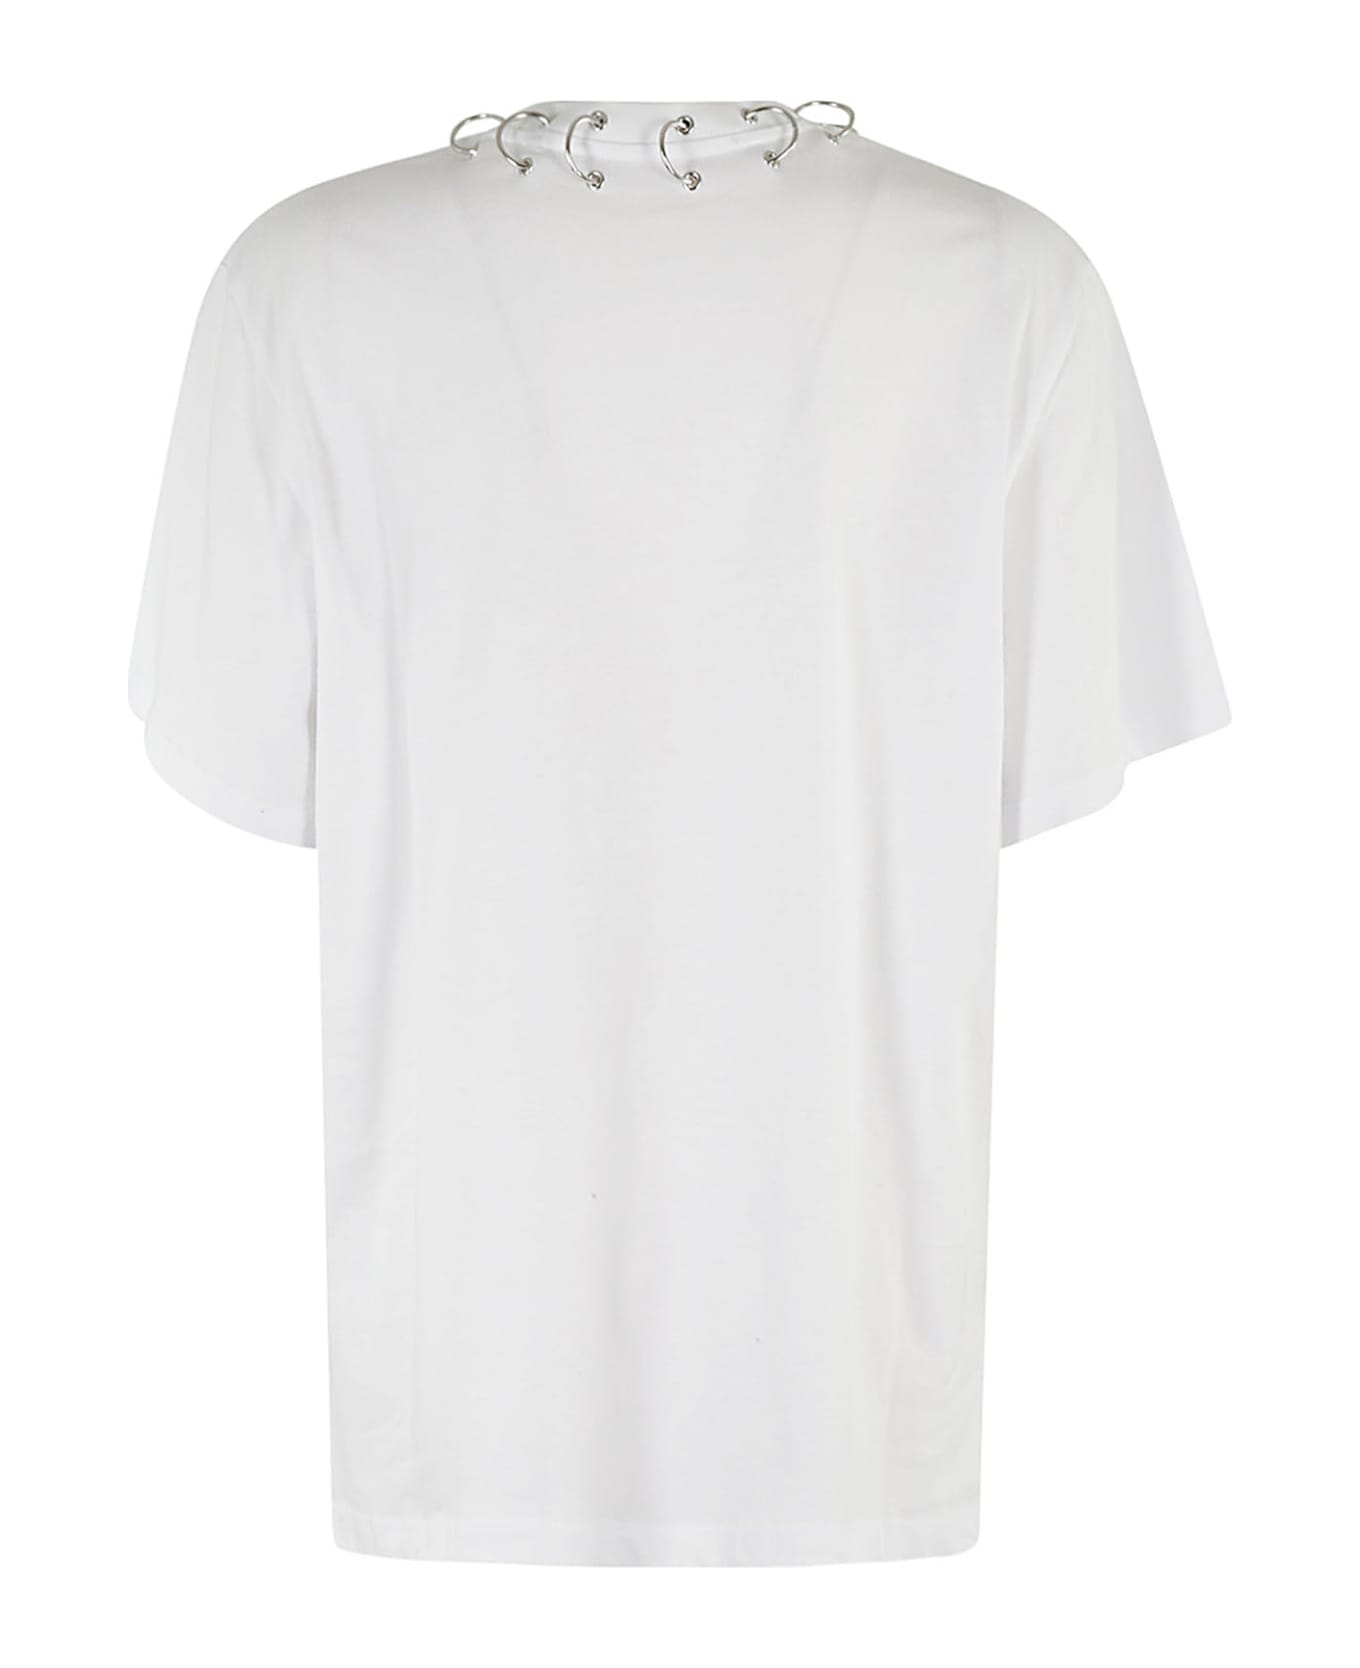 Rotate by Birger Christensen 'oversize Ring' Cotton T-shirt - WHITE